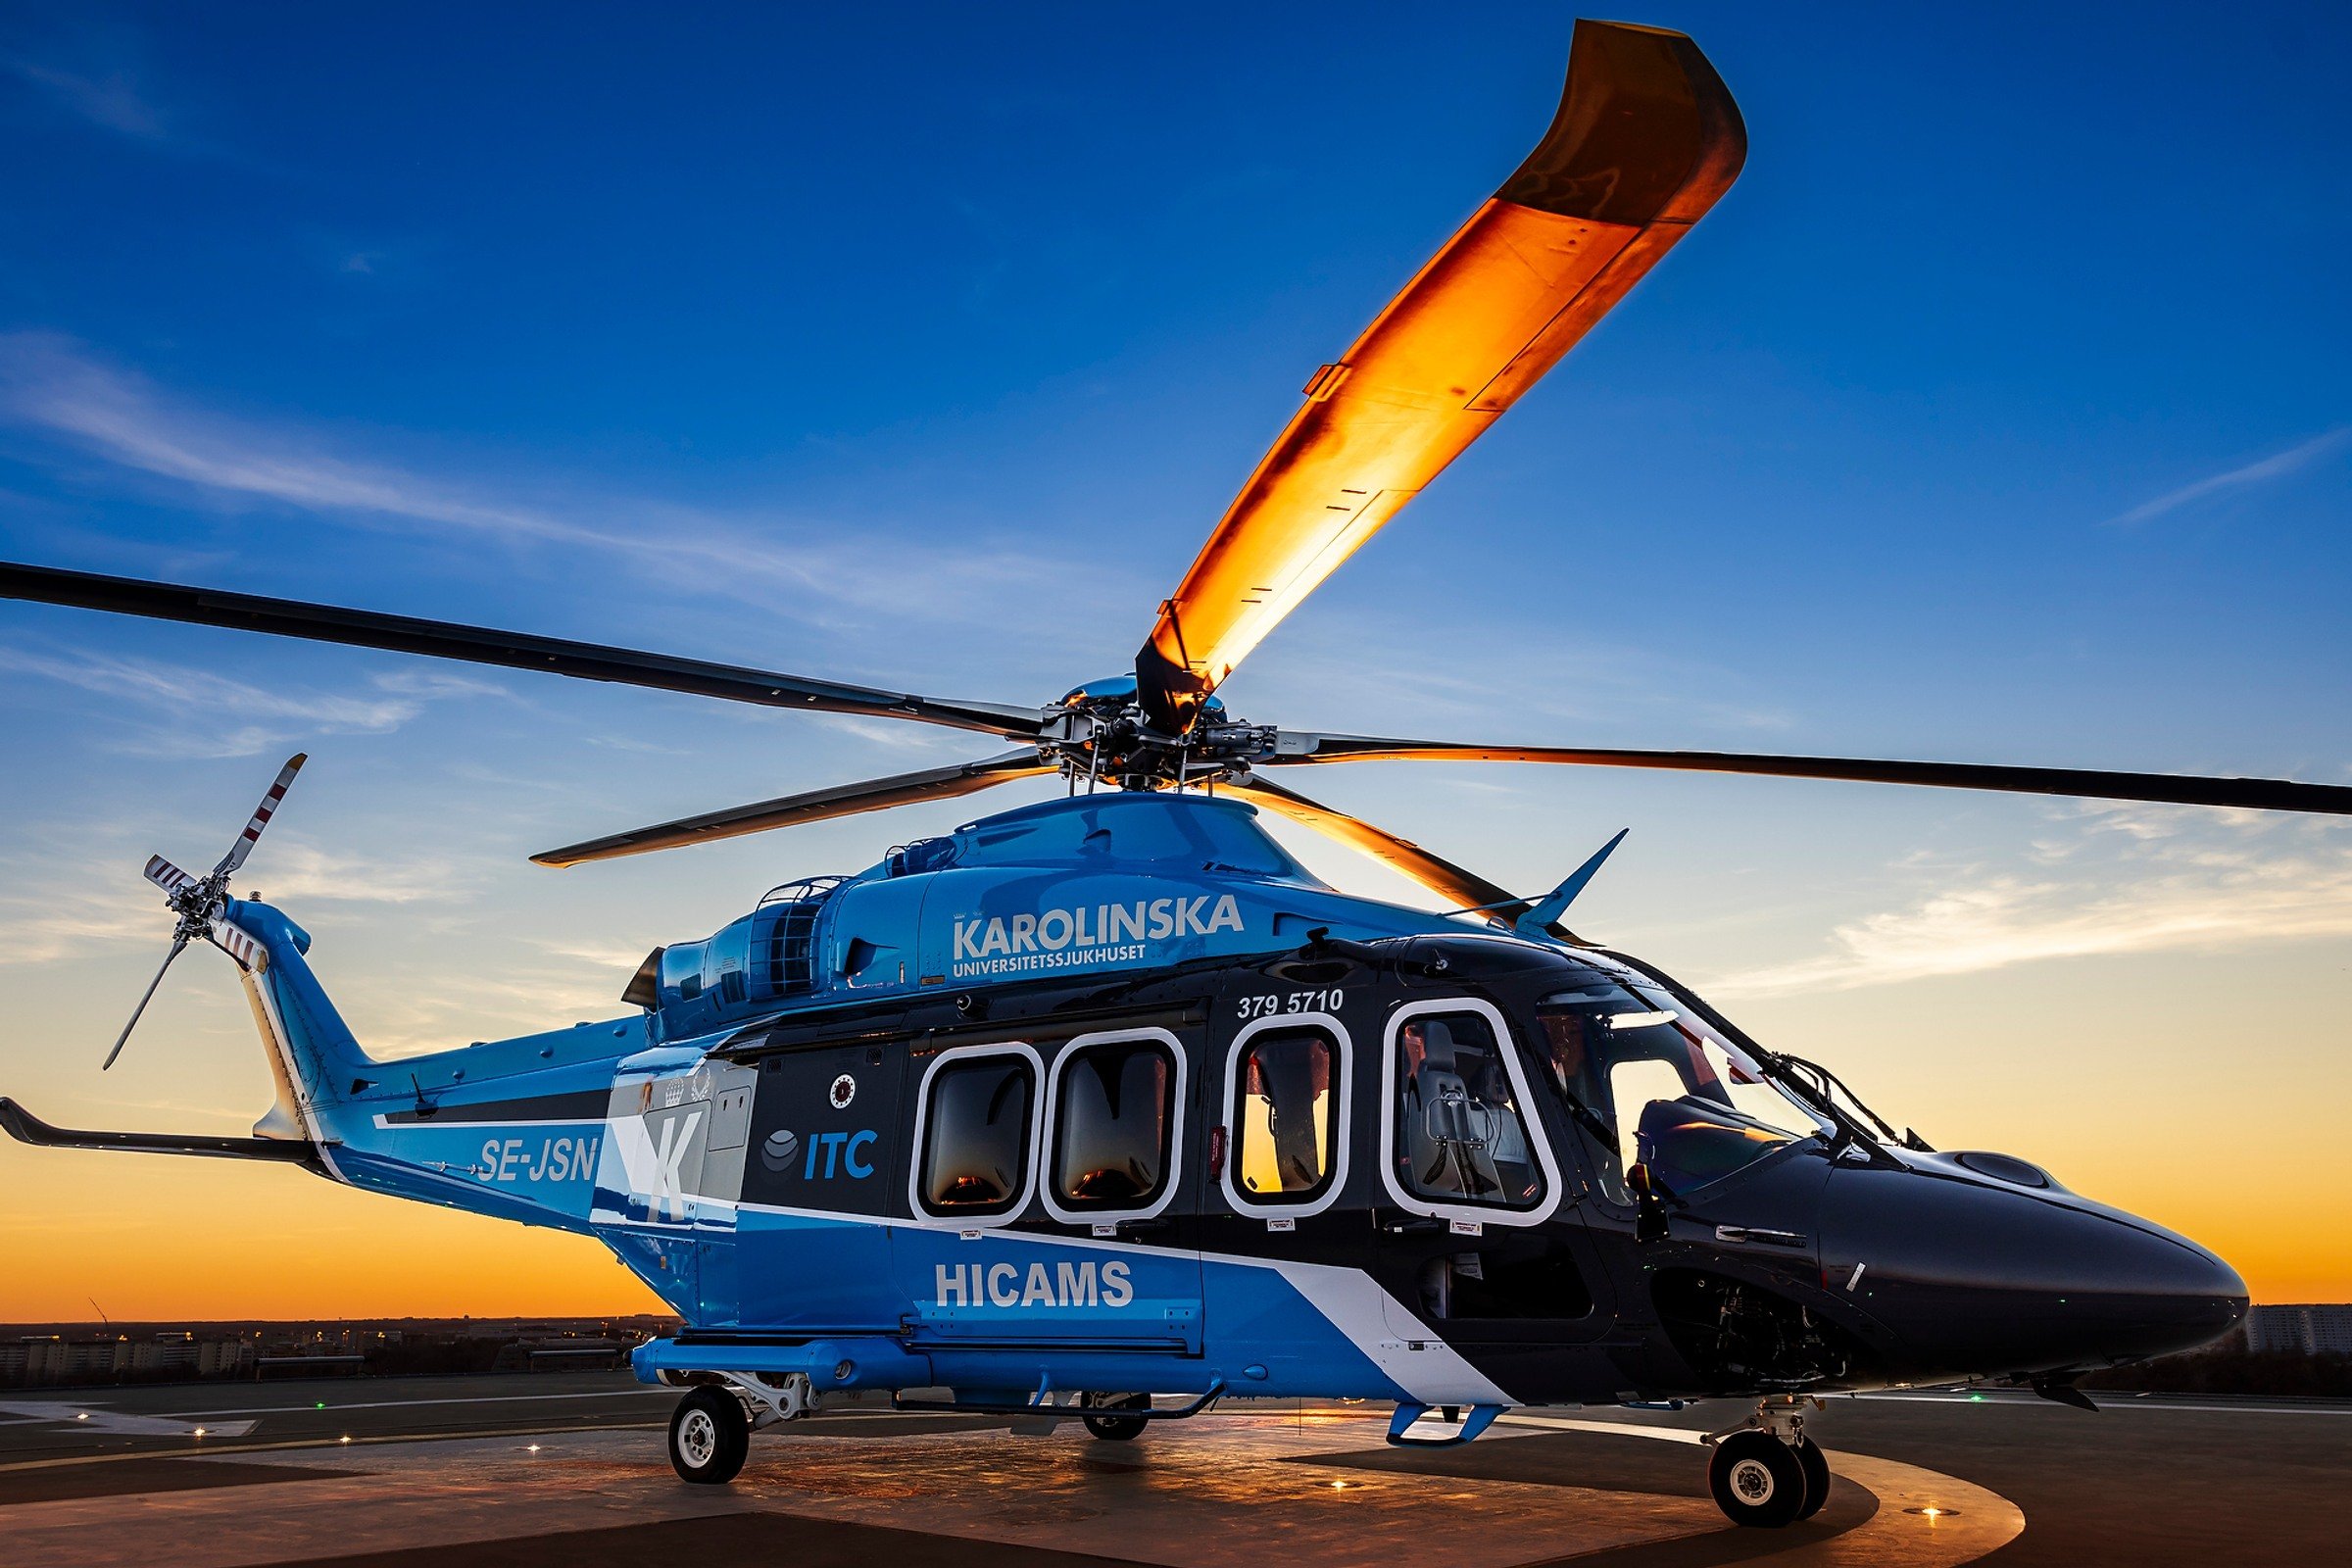 karolinska branded helicopter in sunset